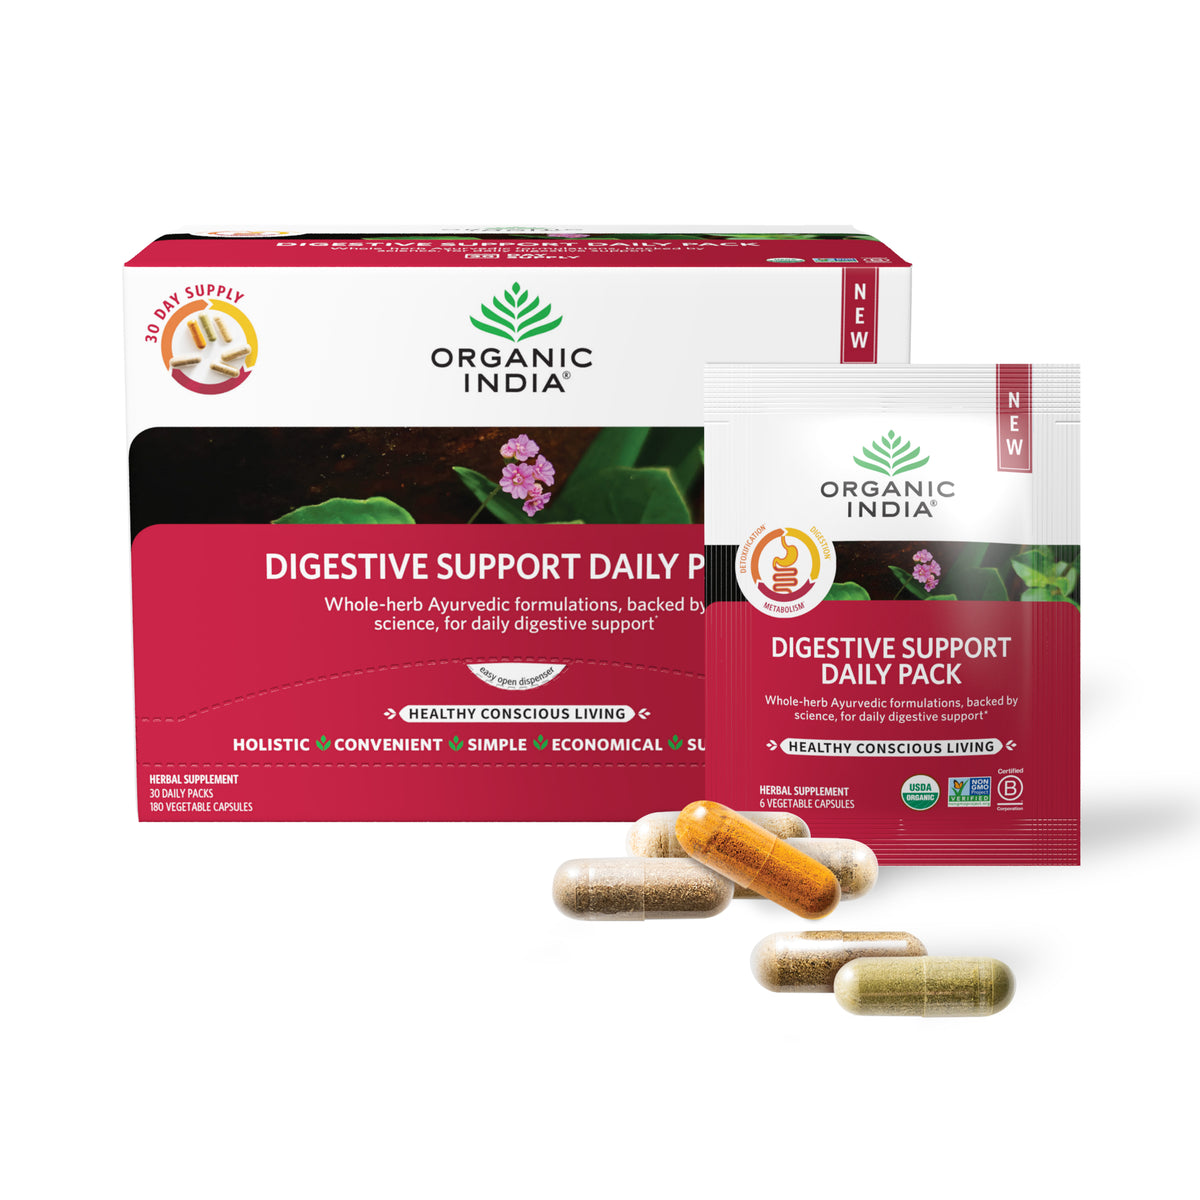 Organic digestive support